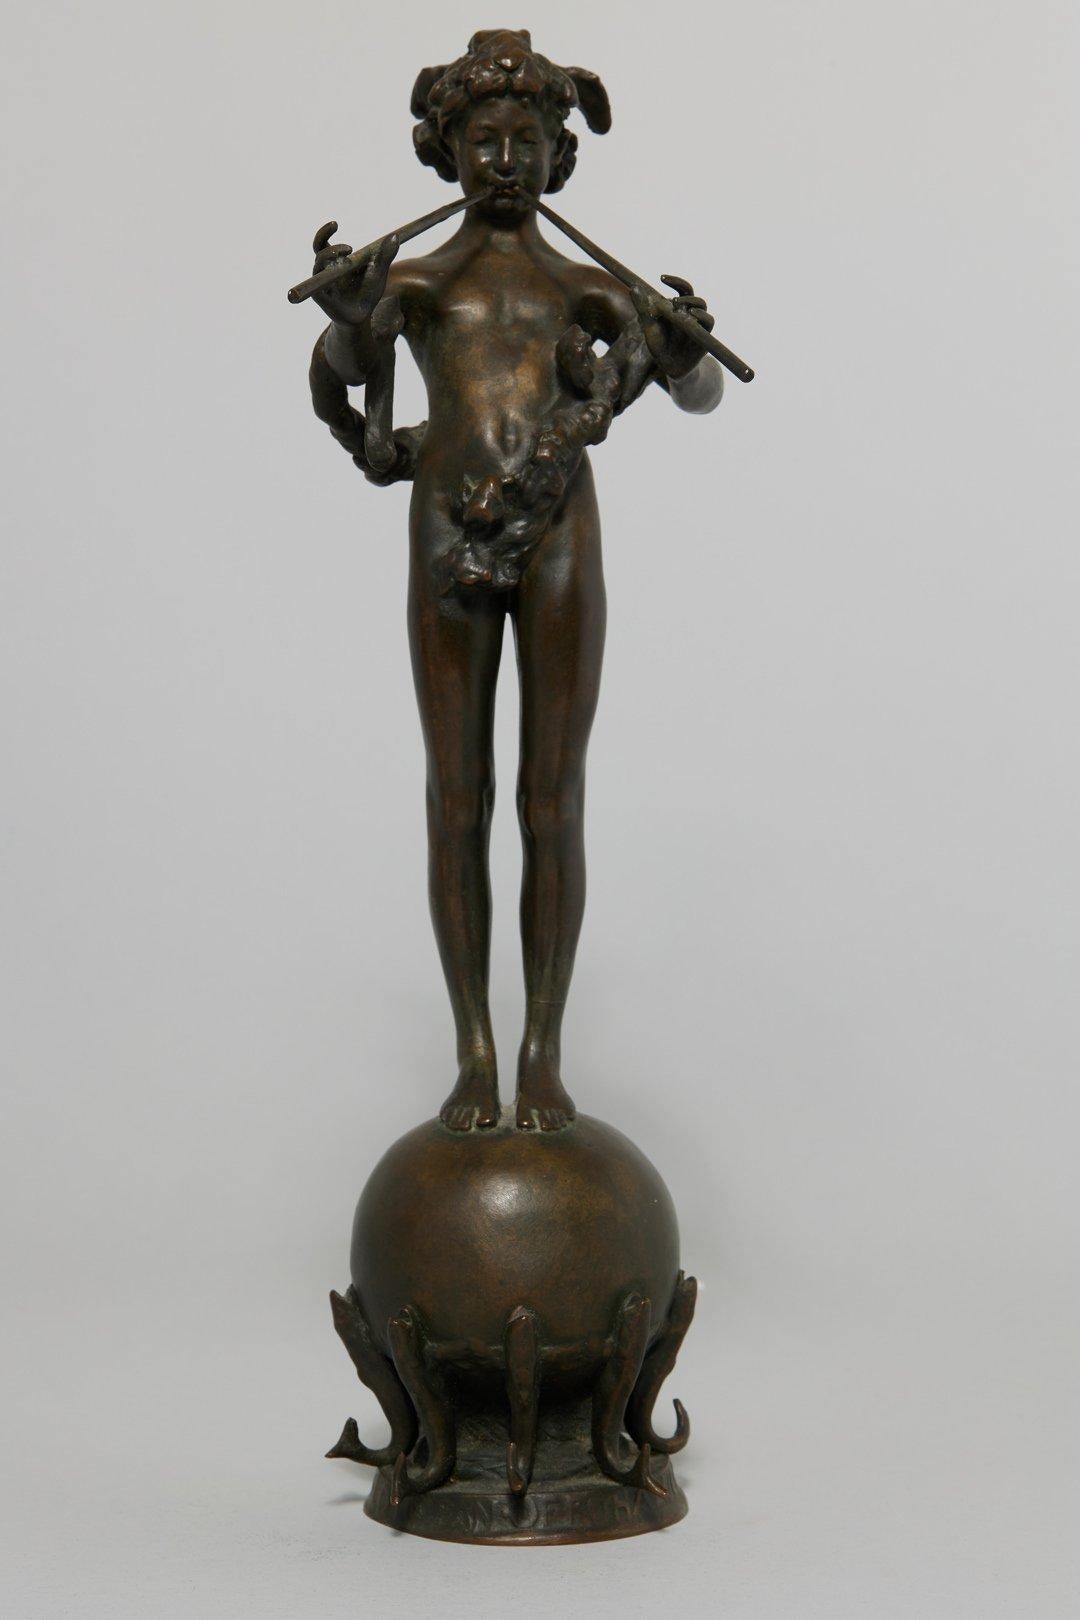 Frederick William MacMonnies Nude Sculpture - Pan of Rohallion, 1889-90 classical bronze sculpture